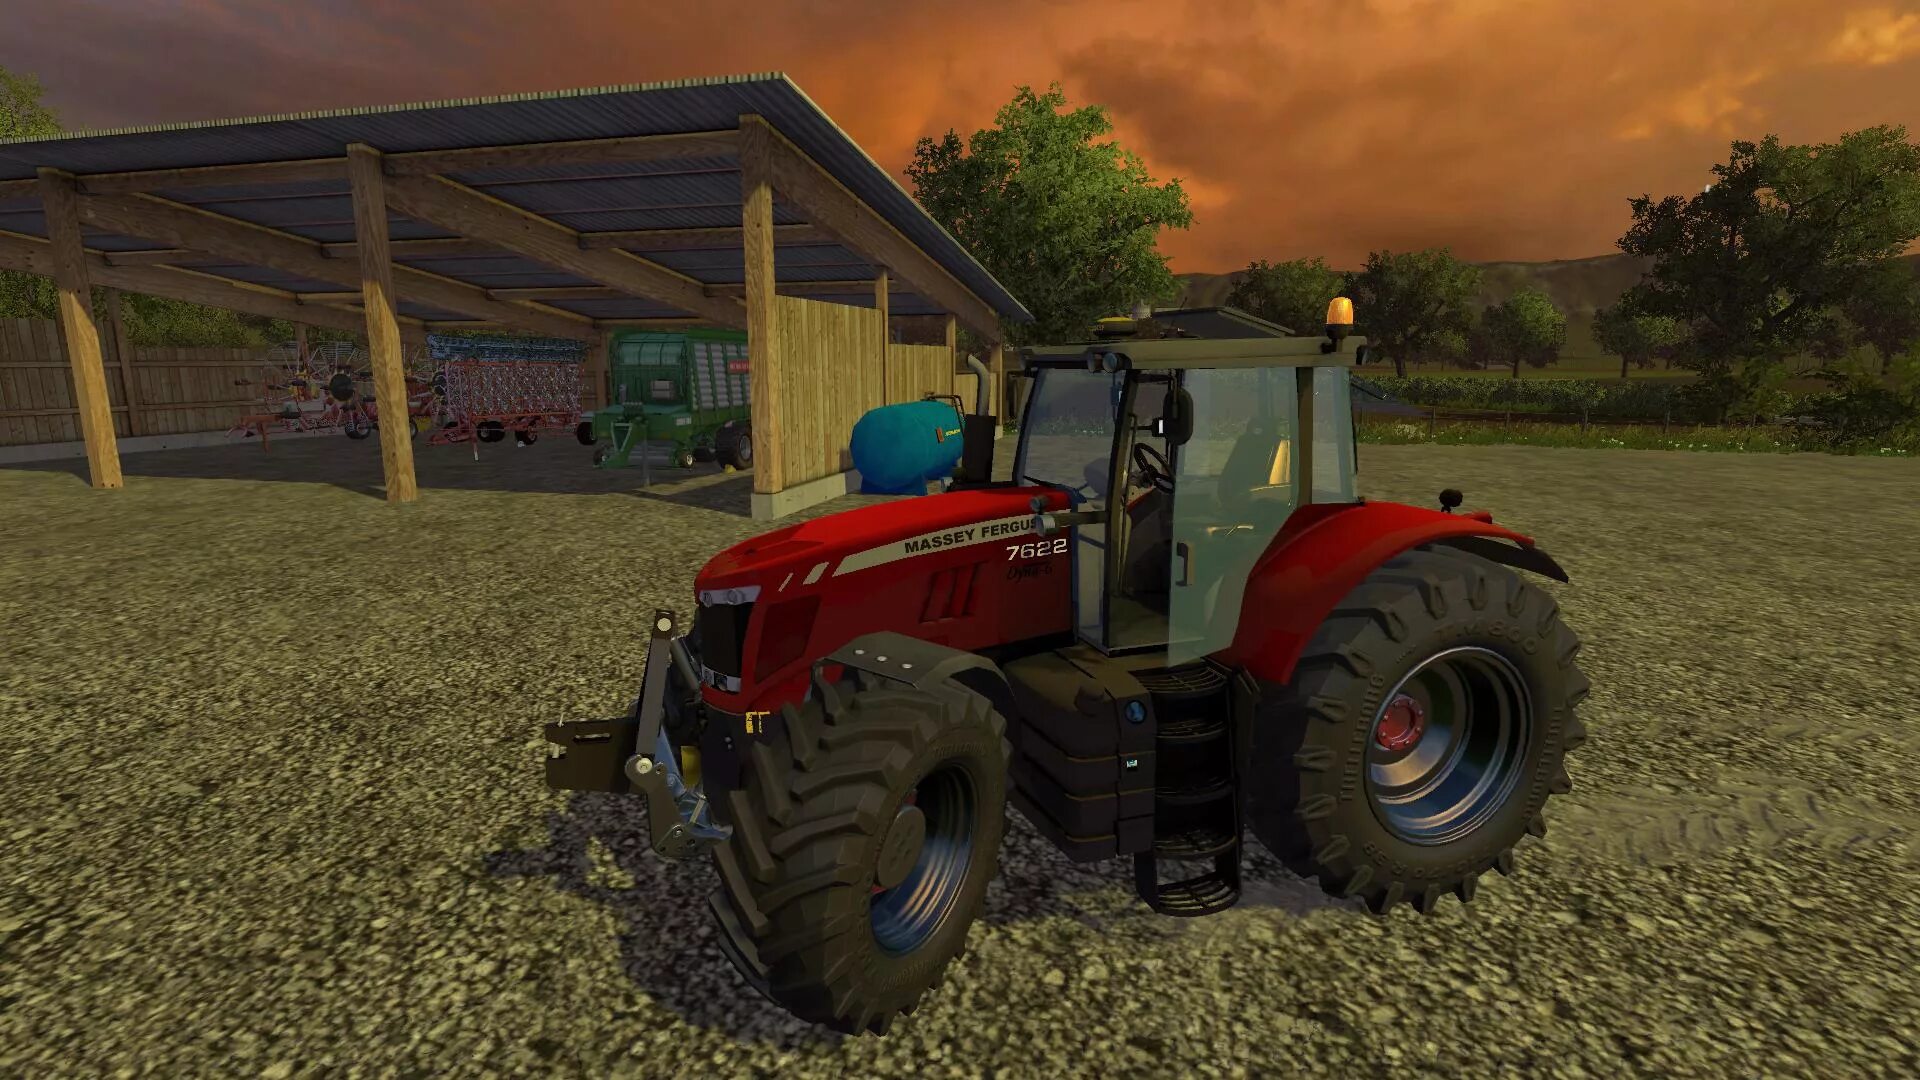 Farm simulator. FS 15. Farming Simulator 2015. Фермер симулятор 19вр. Ферма симулятор 2019 РП.